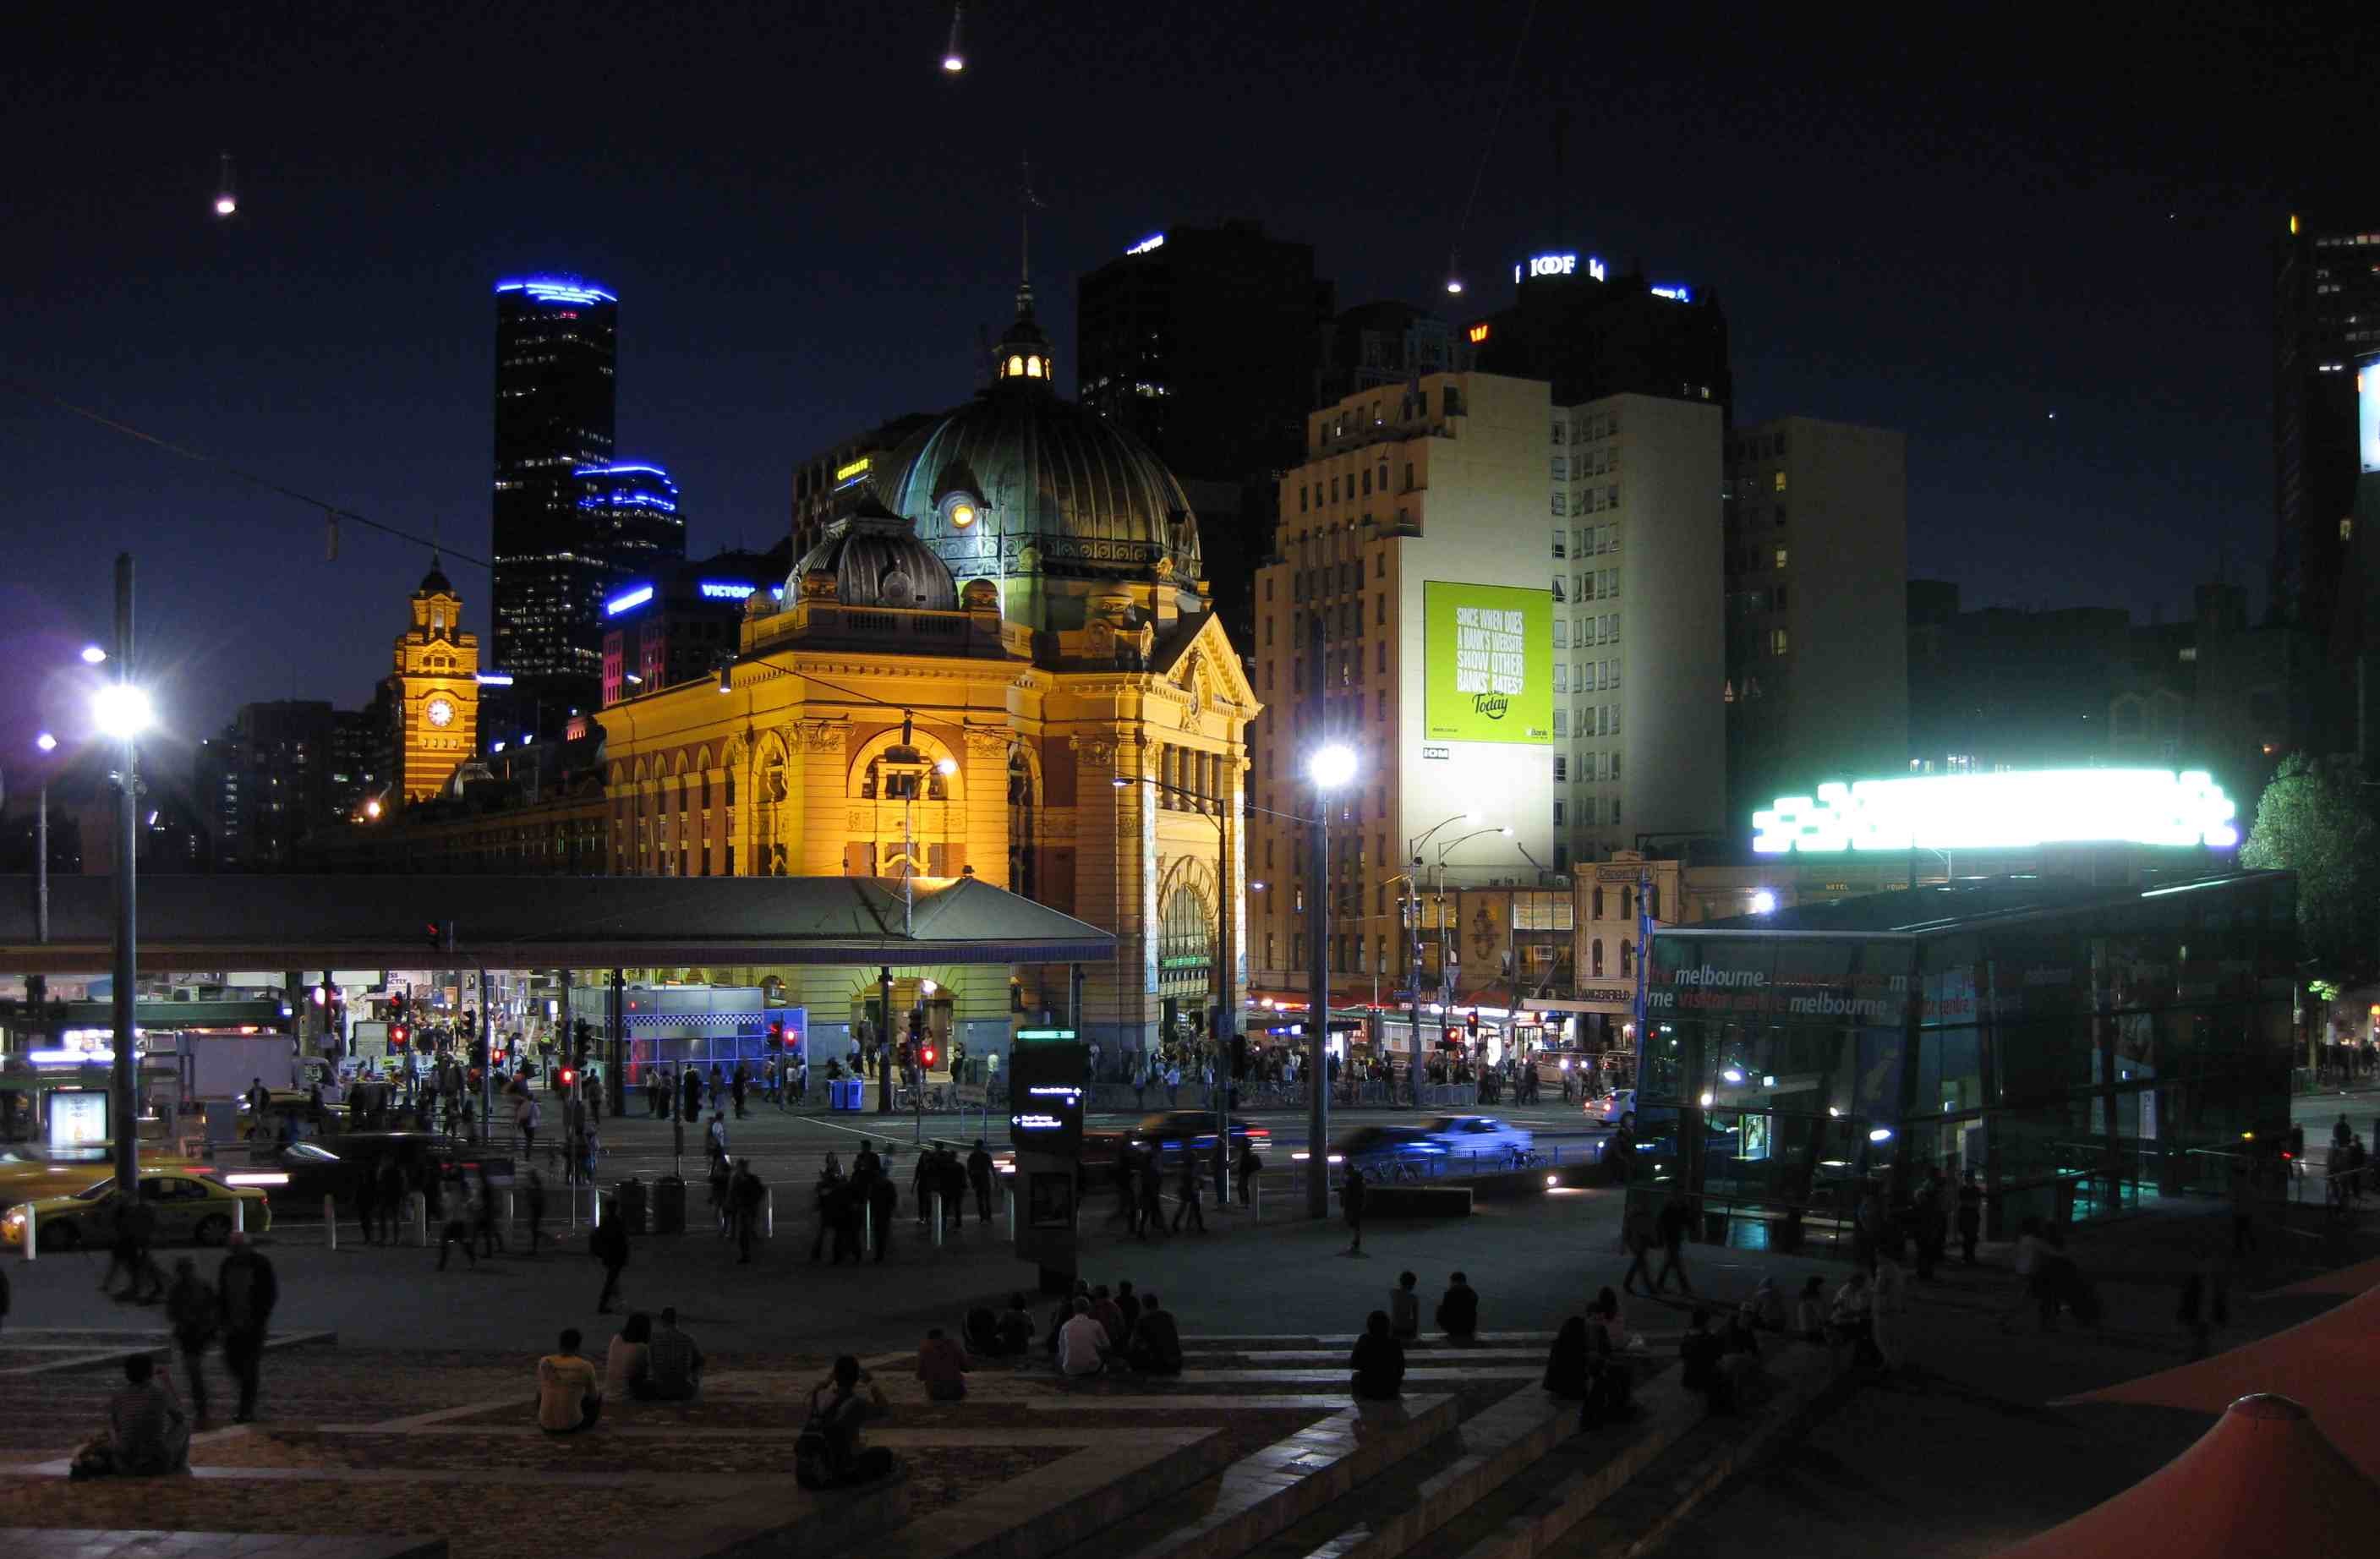 Light pollution: Melbourne's Flinders Street Station at night